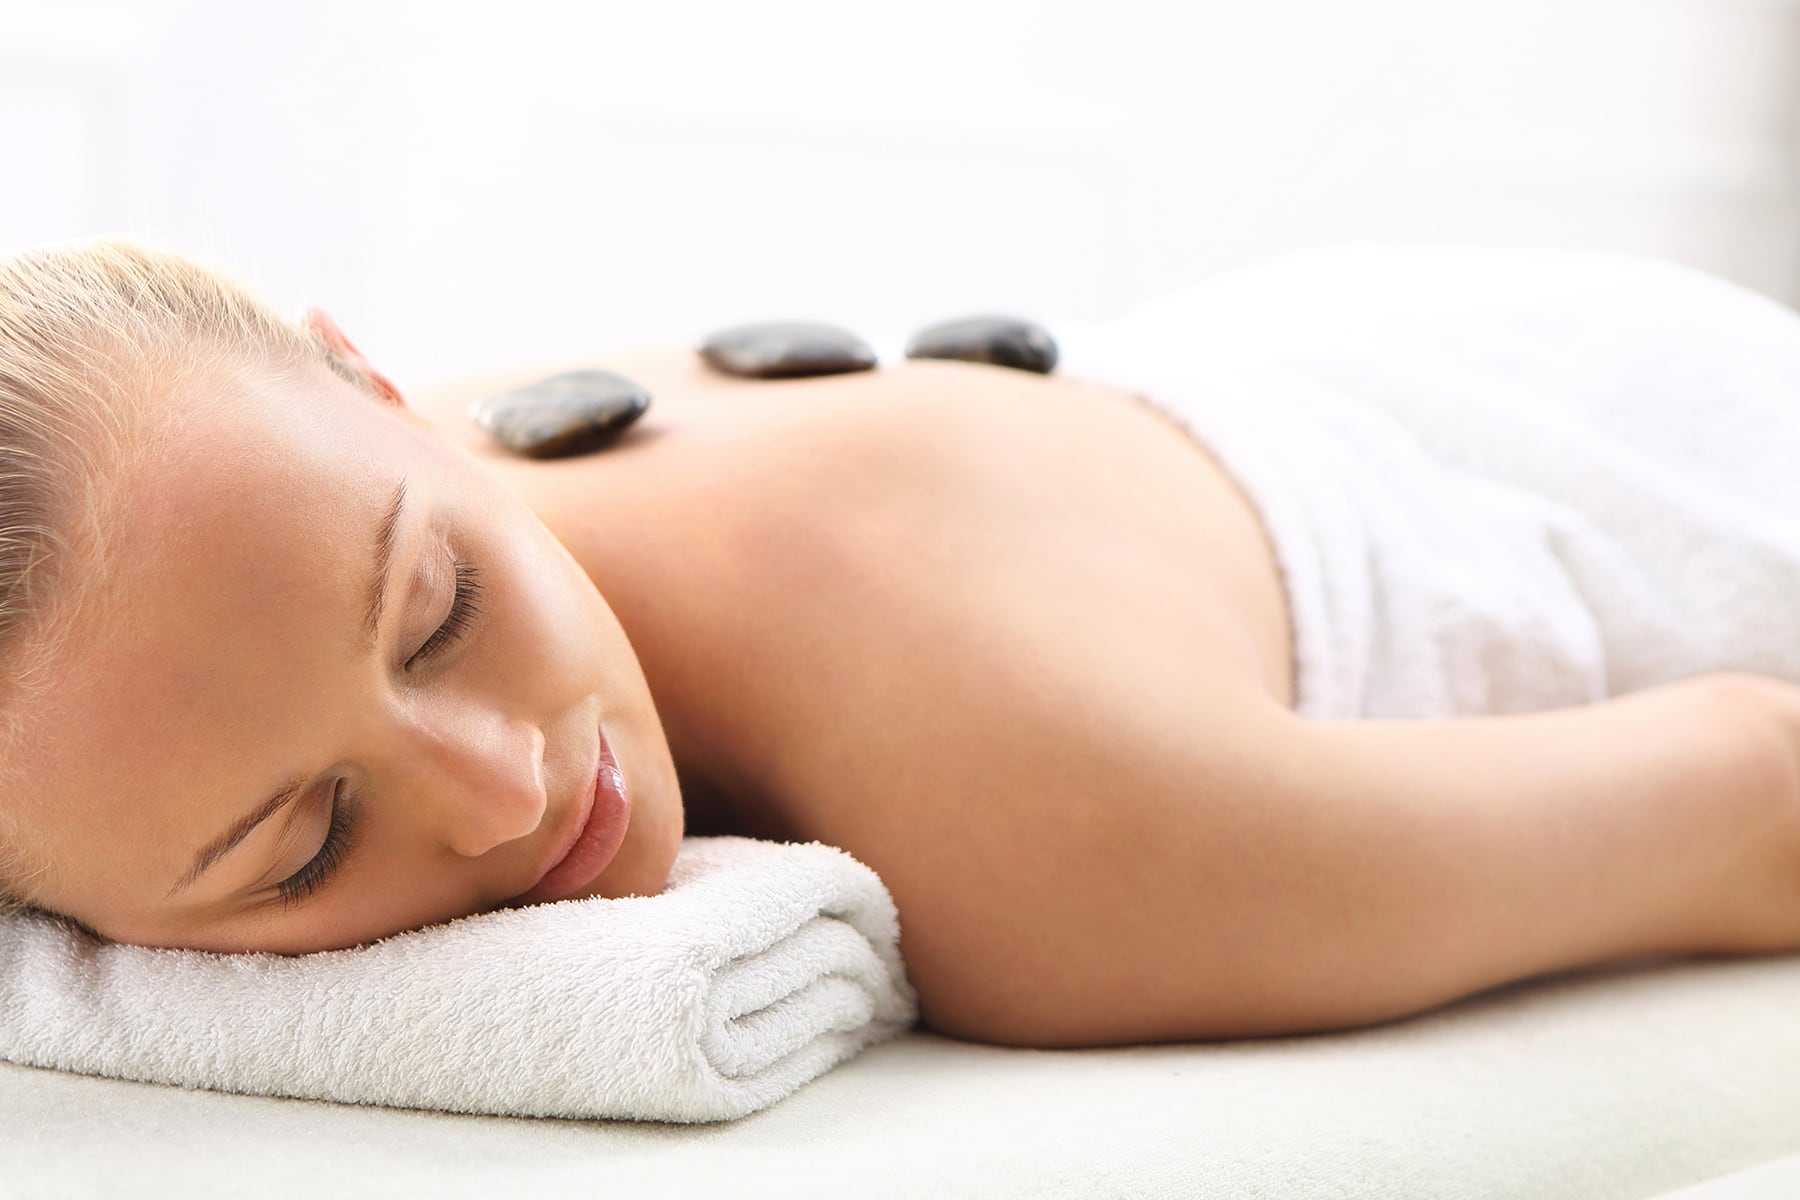 Massage & Body Treatments